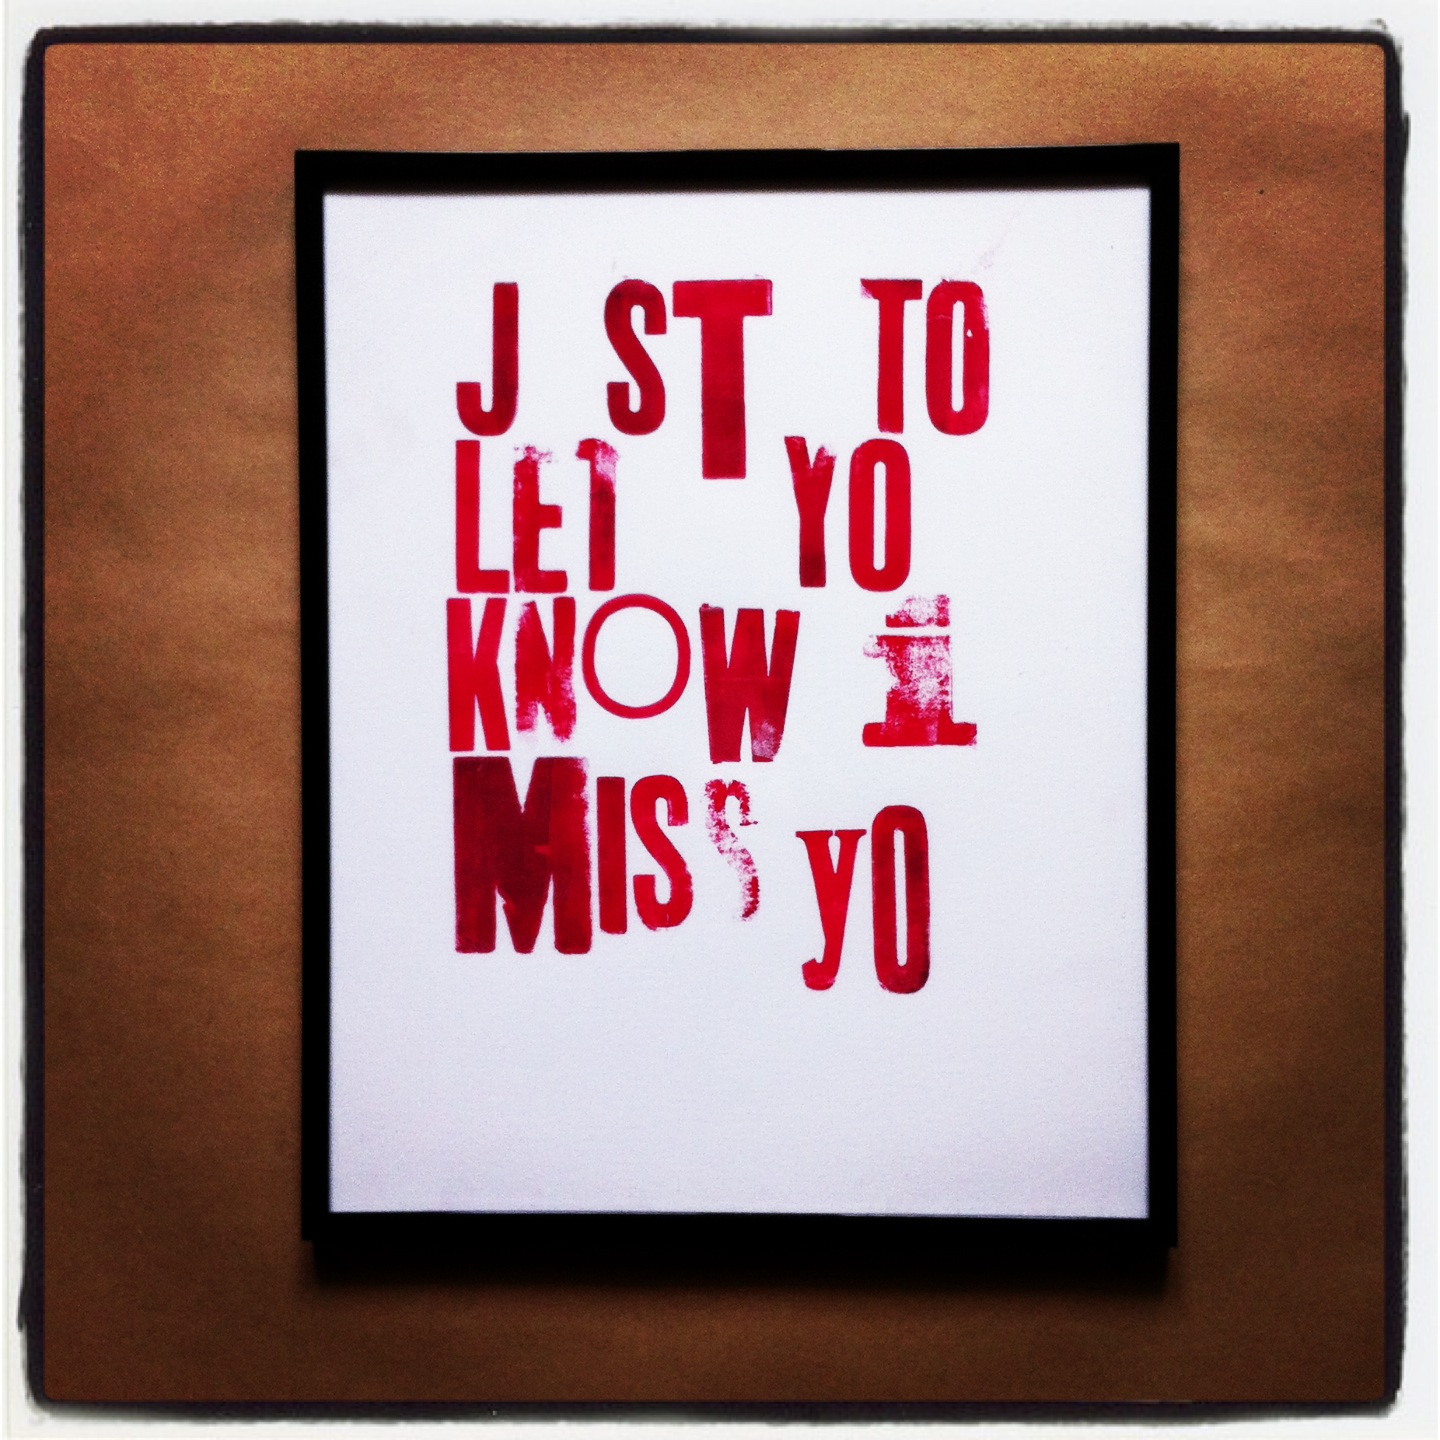 Impression typographique J.st to let yo. know that I miss Yo.